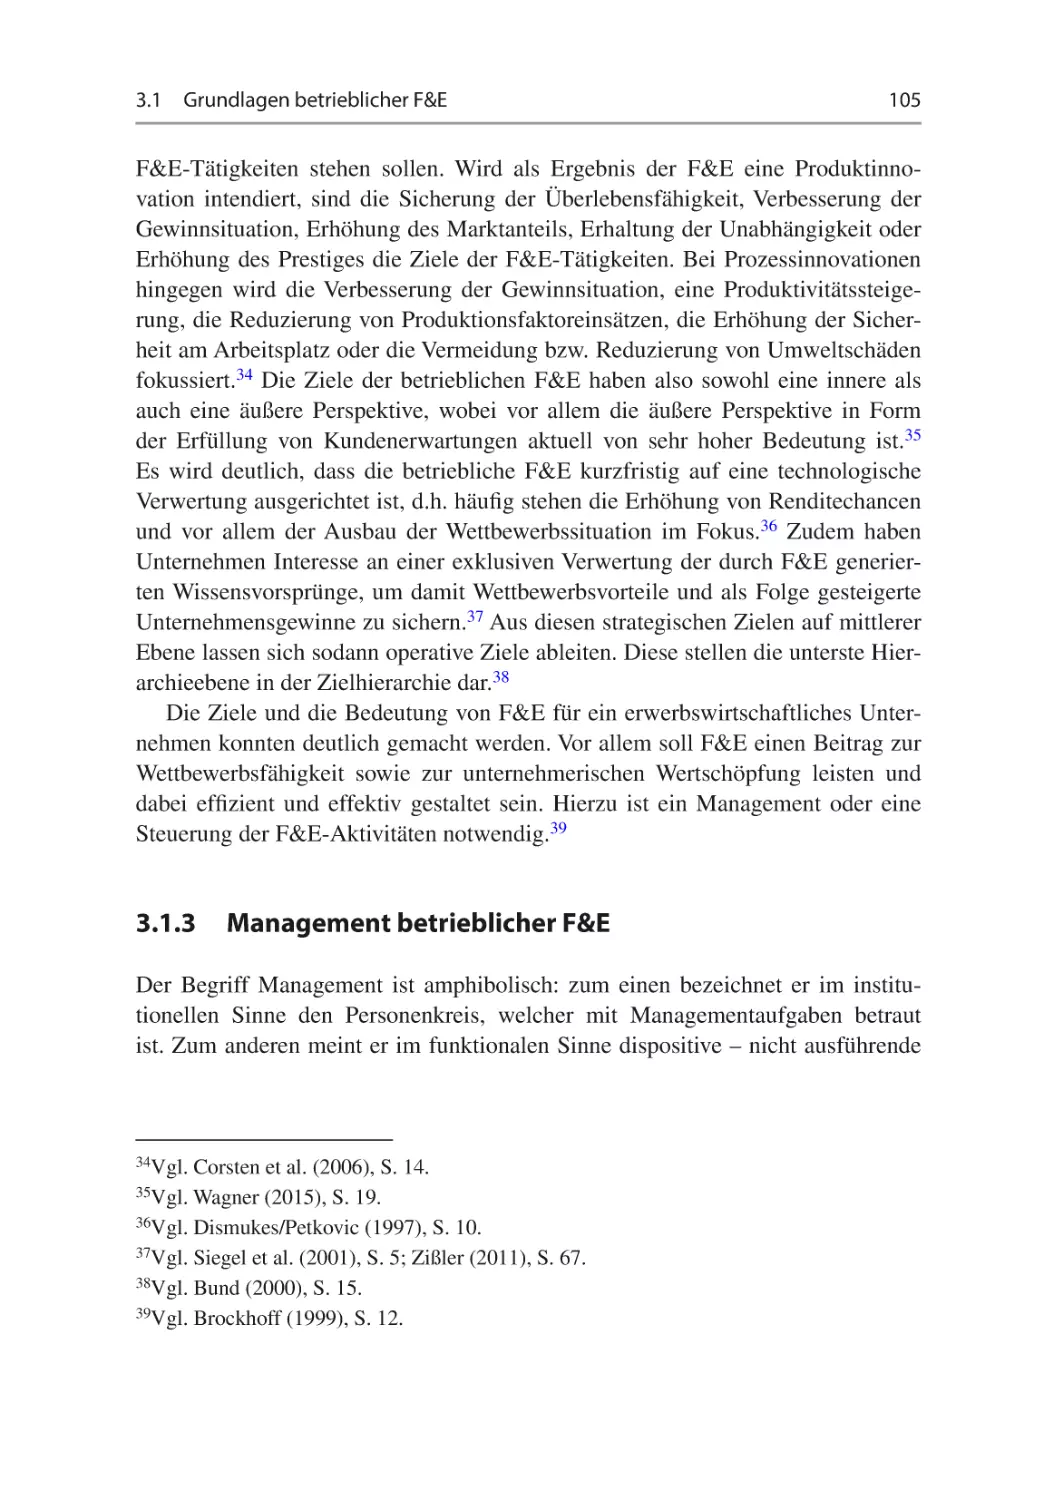 3.1.3	Management betrieblicher F&E